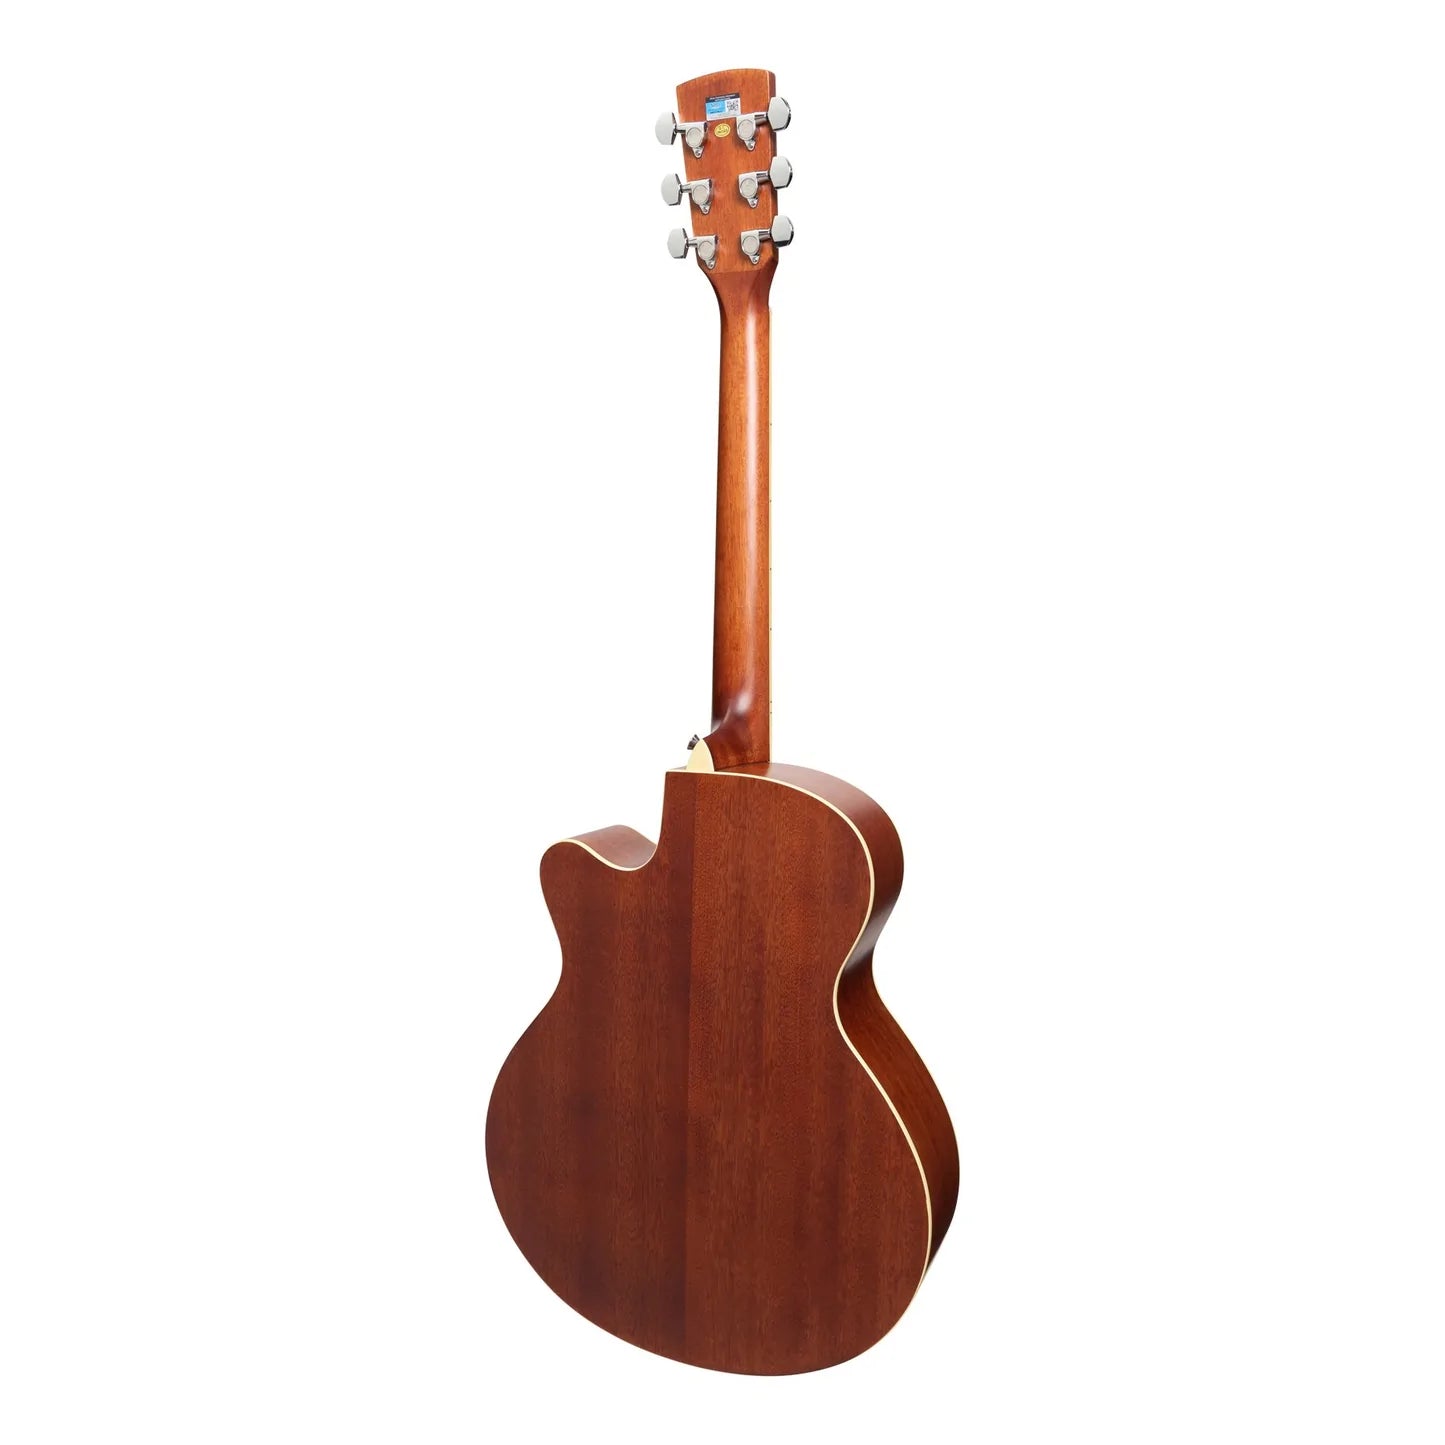 Saga '700 Series' Solid Spruce Top Acoustic-Electric Small-Body Cutaway Guitar | Natural Satin